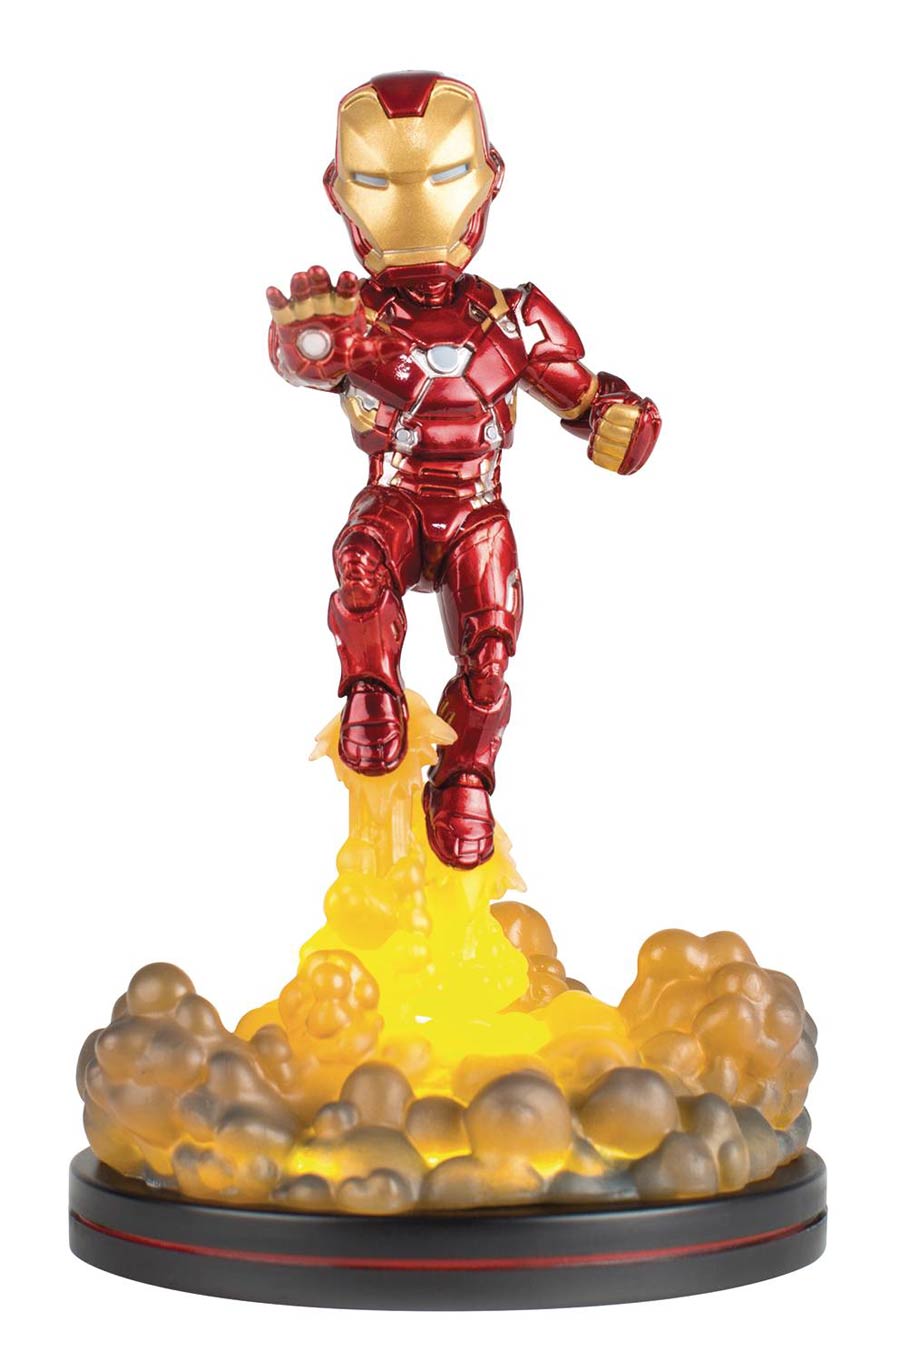 Captain America Civil War Iron Man Light-Up Q-Fig Figure